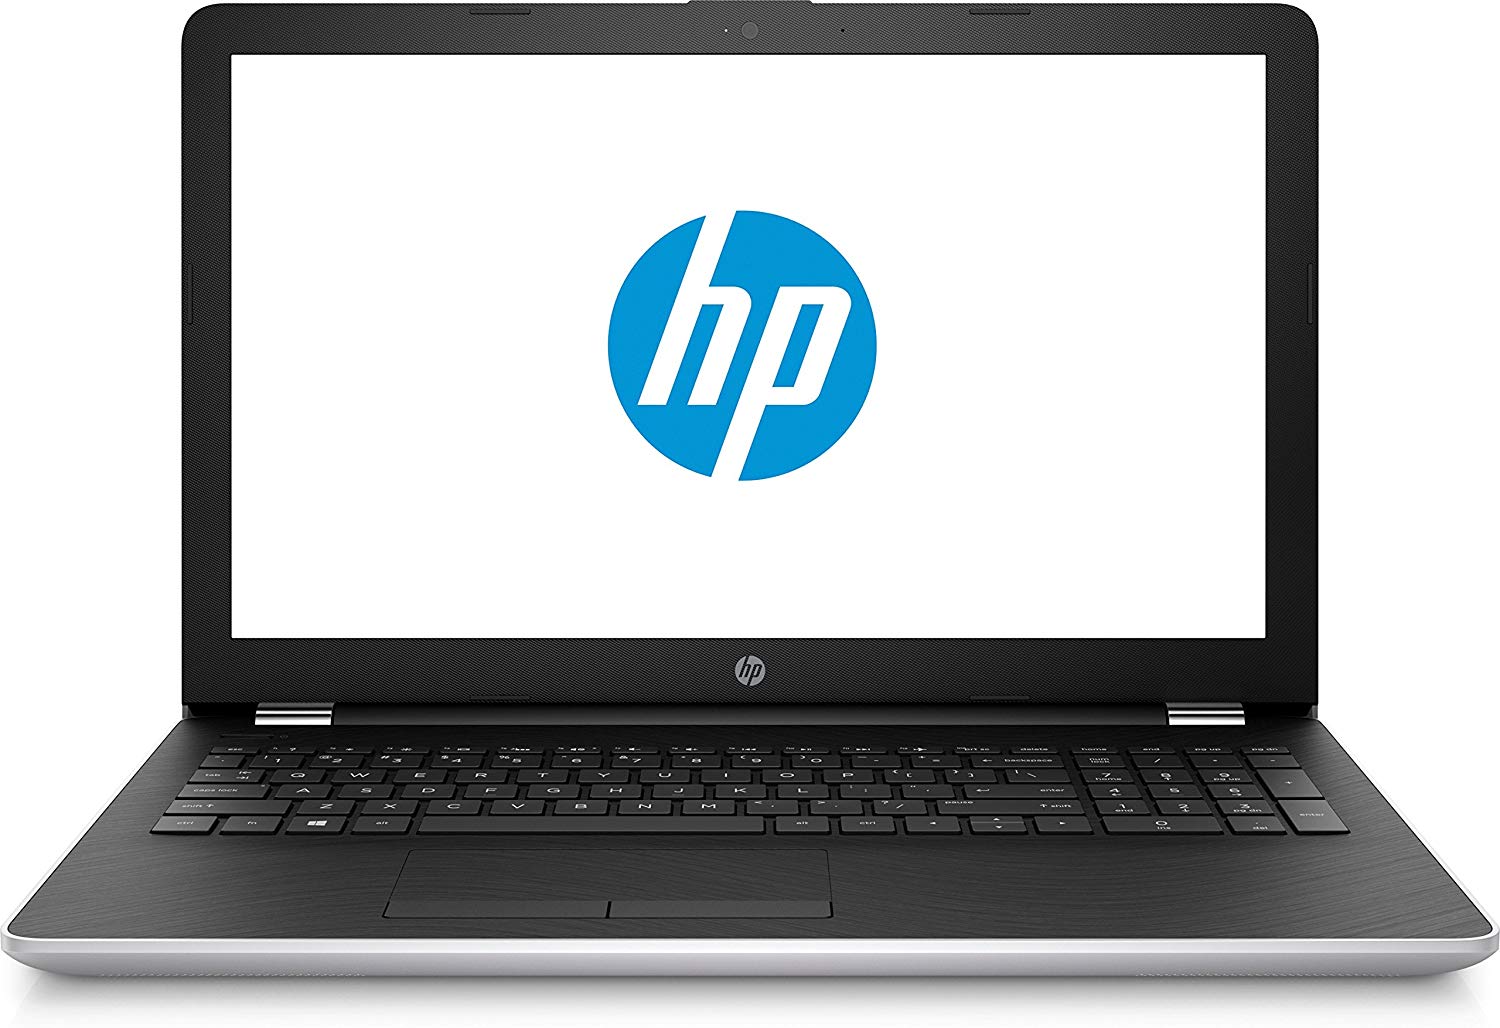 HP 15 DA0070TX 2018 15.6-inch Laptop (7th Gen i3-7100U/8GB/1TB/Windows 10 Home/Integrated Graphics), Natural Silver